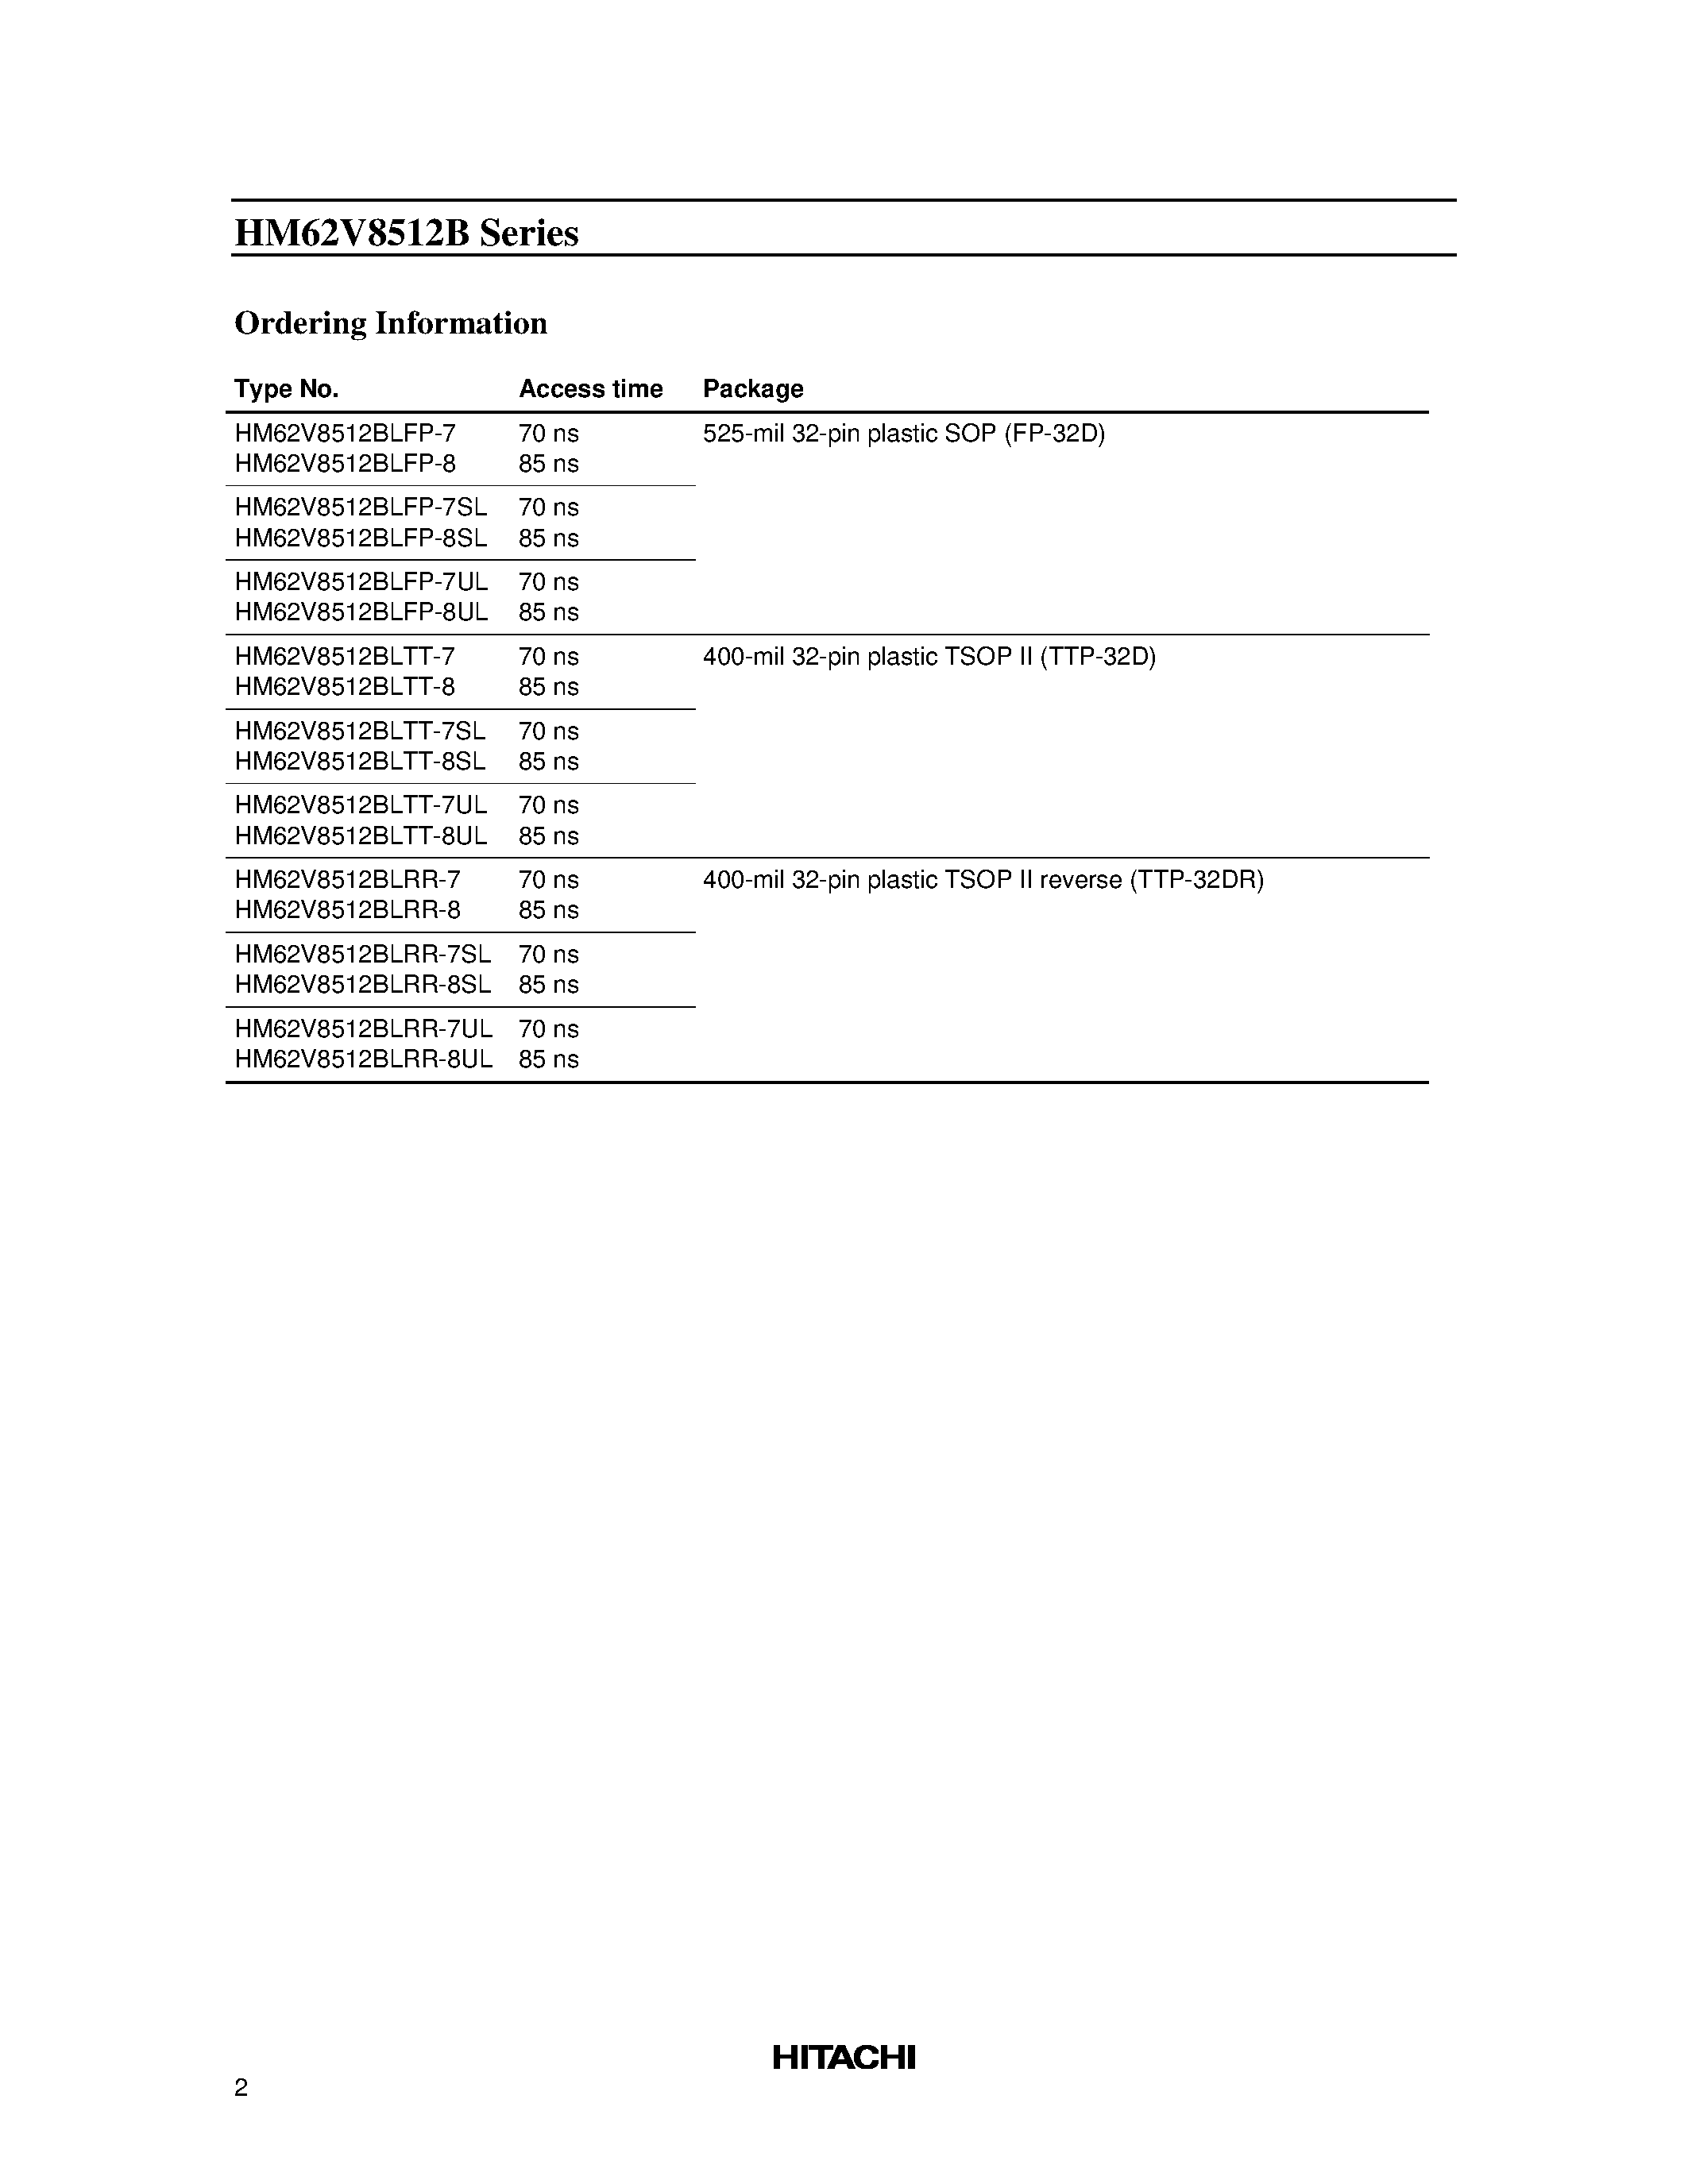 Datasheet HM62V8512BLRR-8 - 4 M SRAM (512-kword x 8-bit) page 2